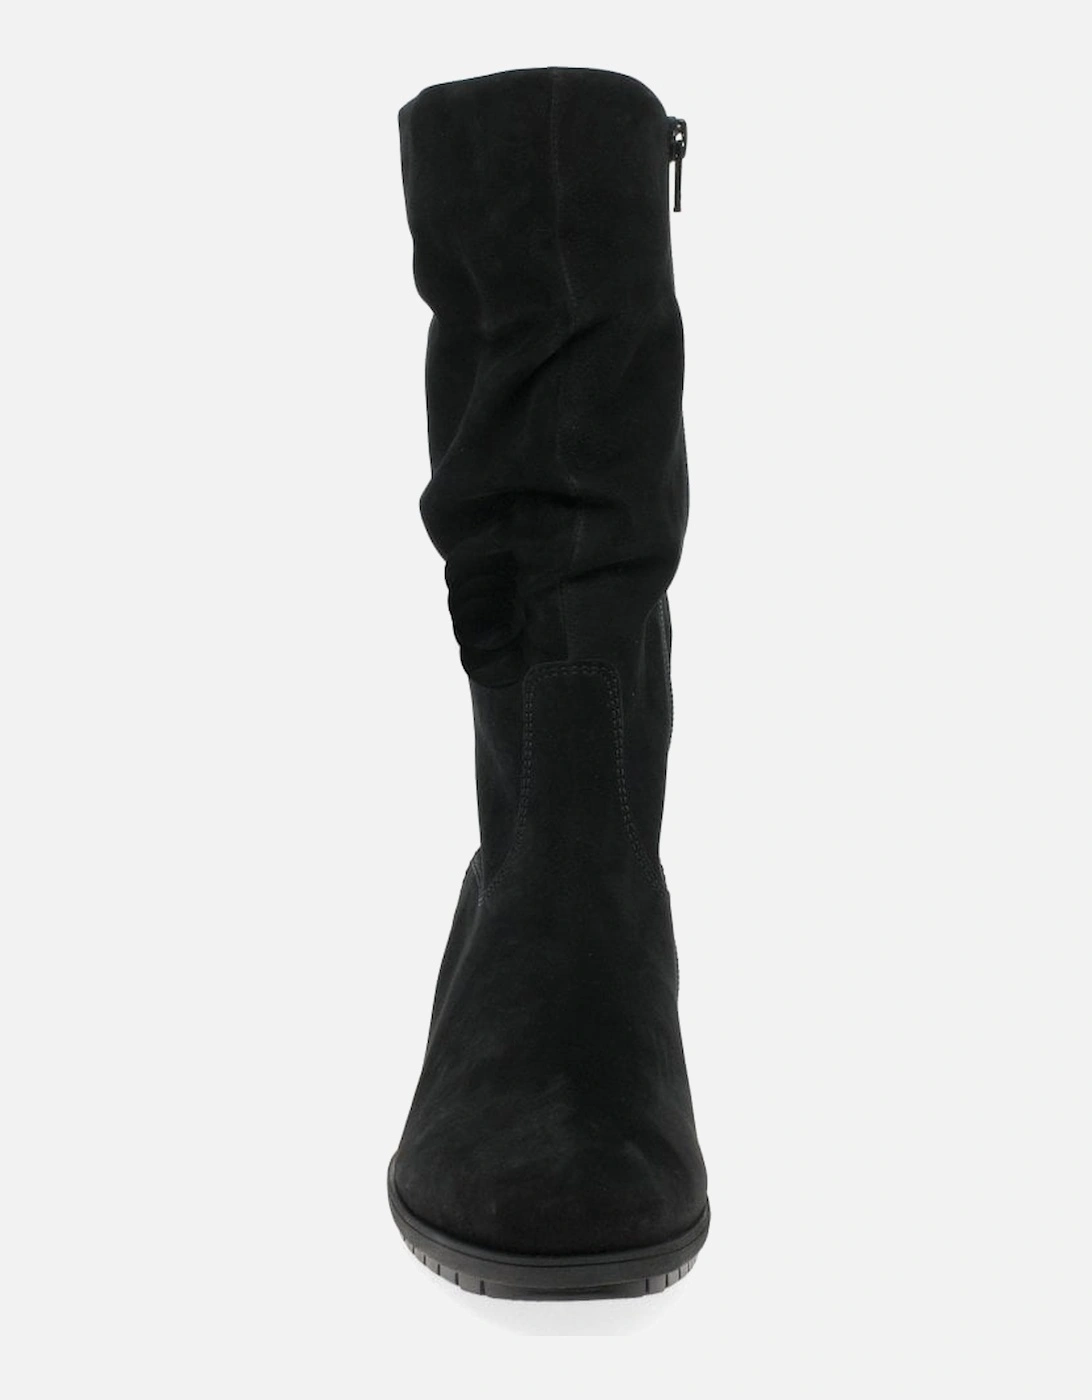 Oslo Womens Calf Length Boots